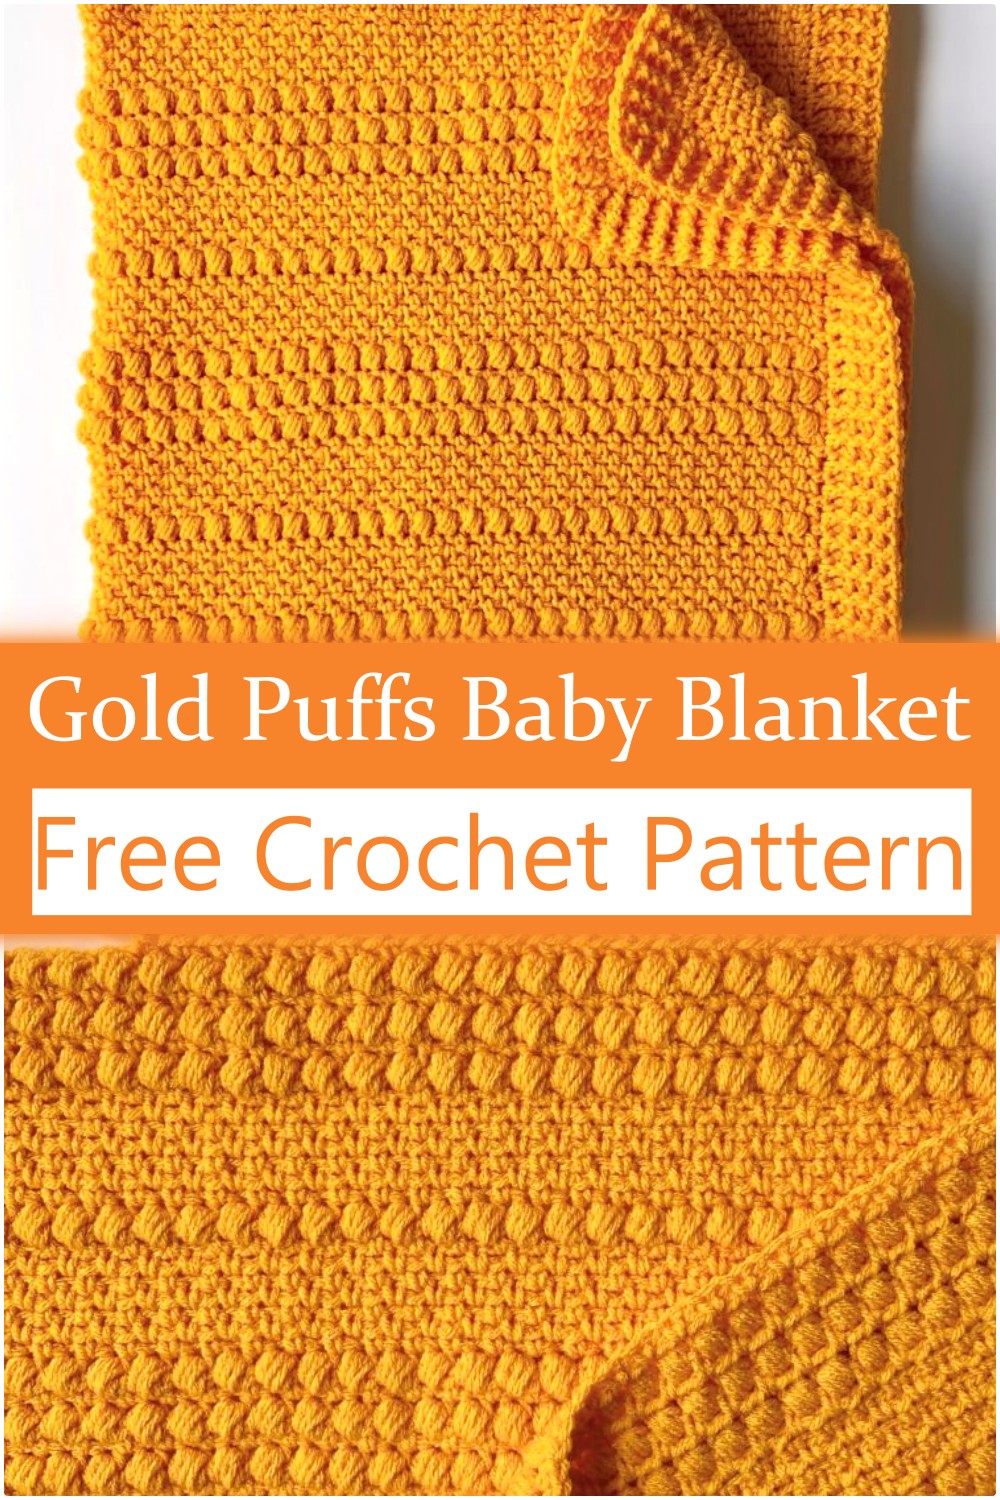 Crochet Gold Puffs Baby Blanket